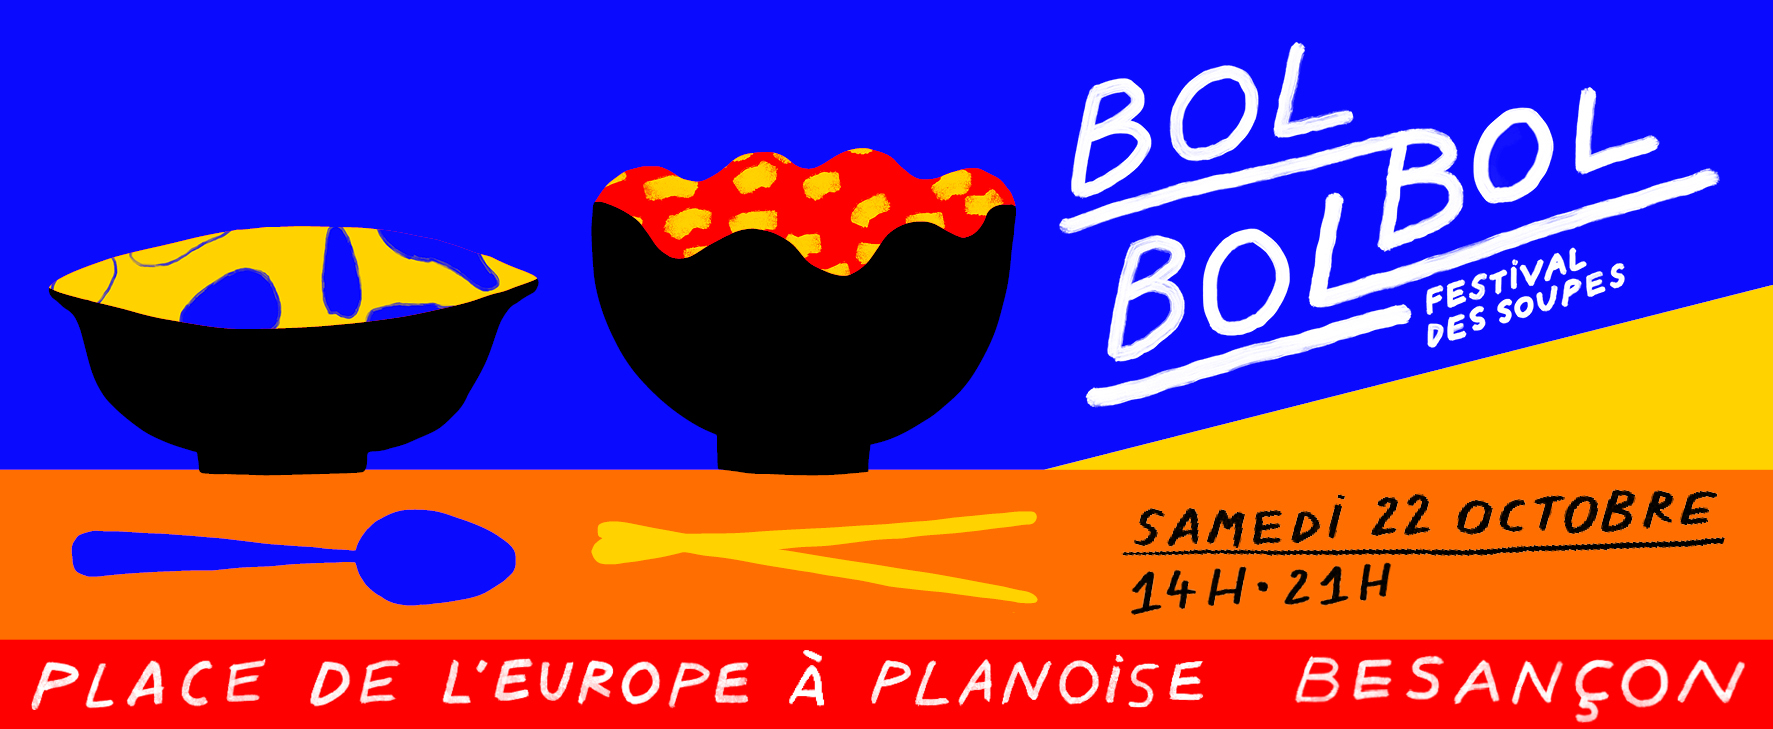 BOL BOL BOL – festival des soupes